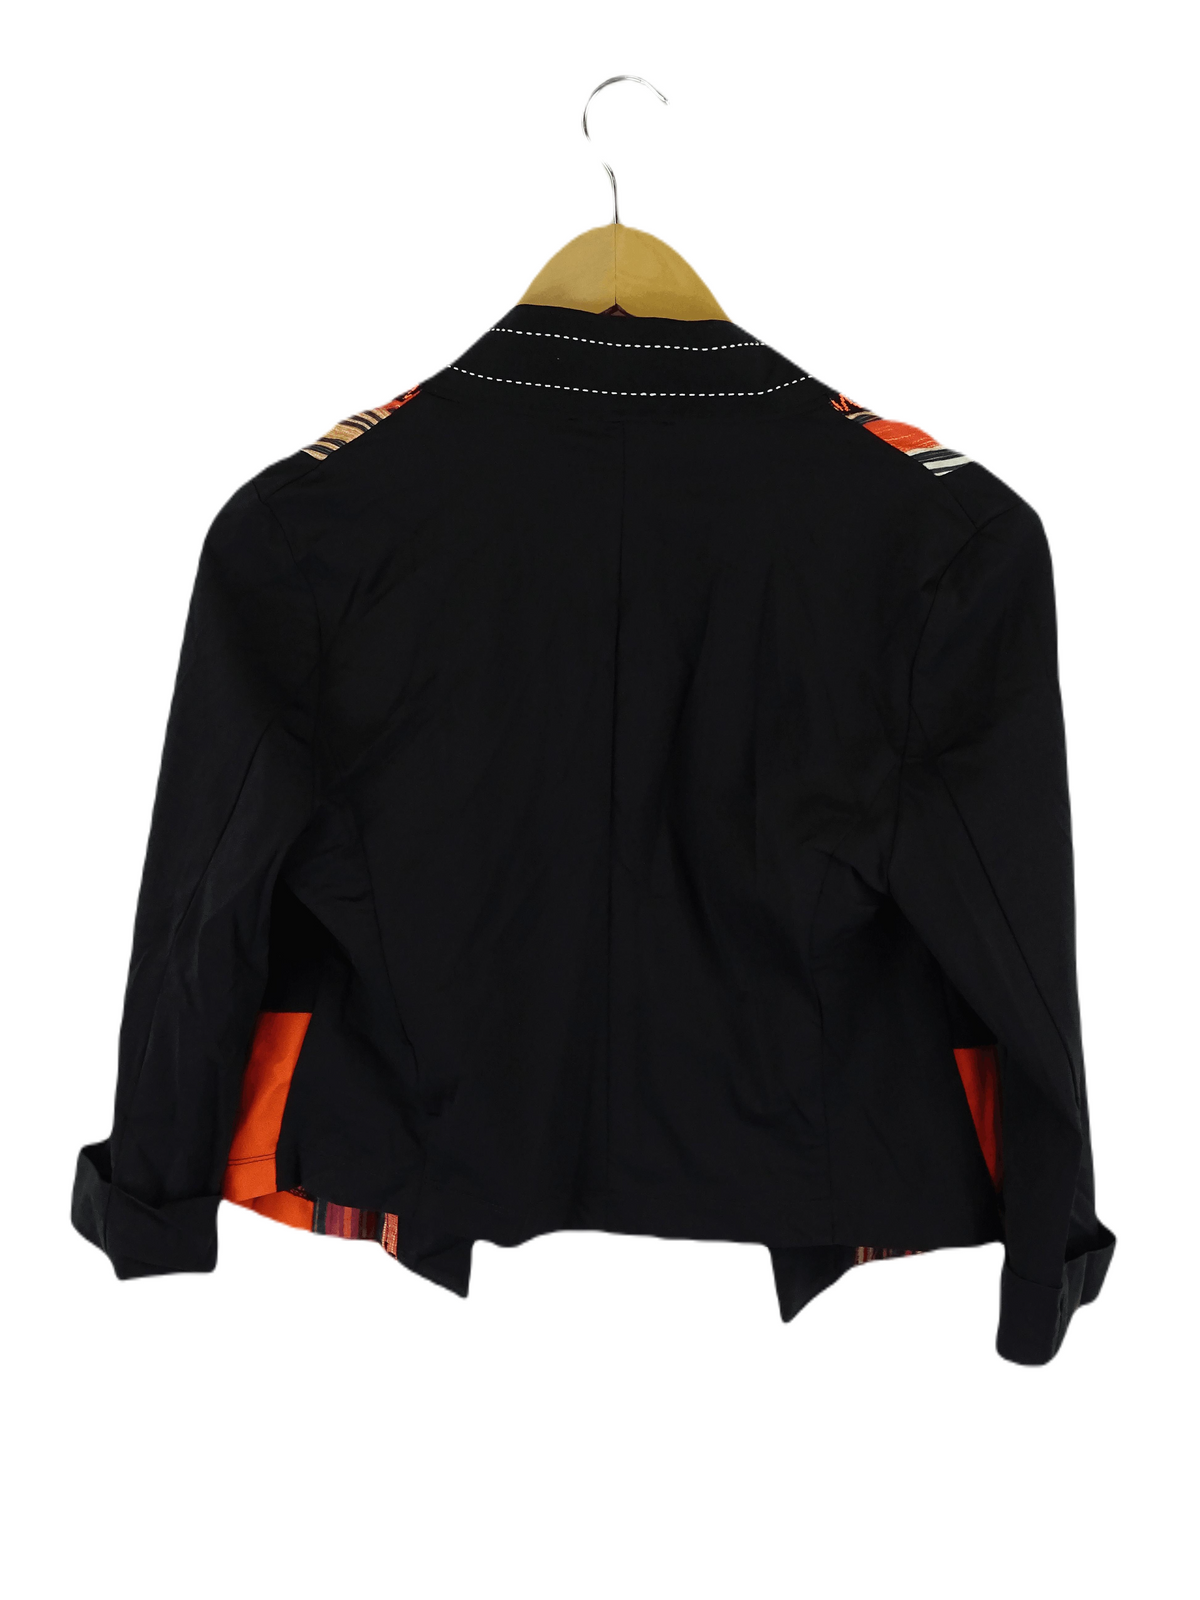 David Pond Black And Orange Jacket 8